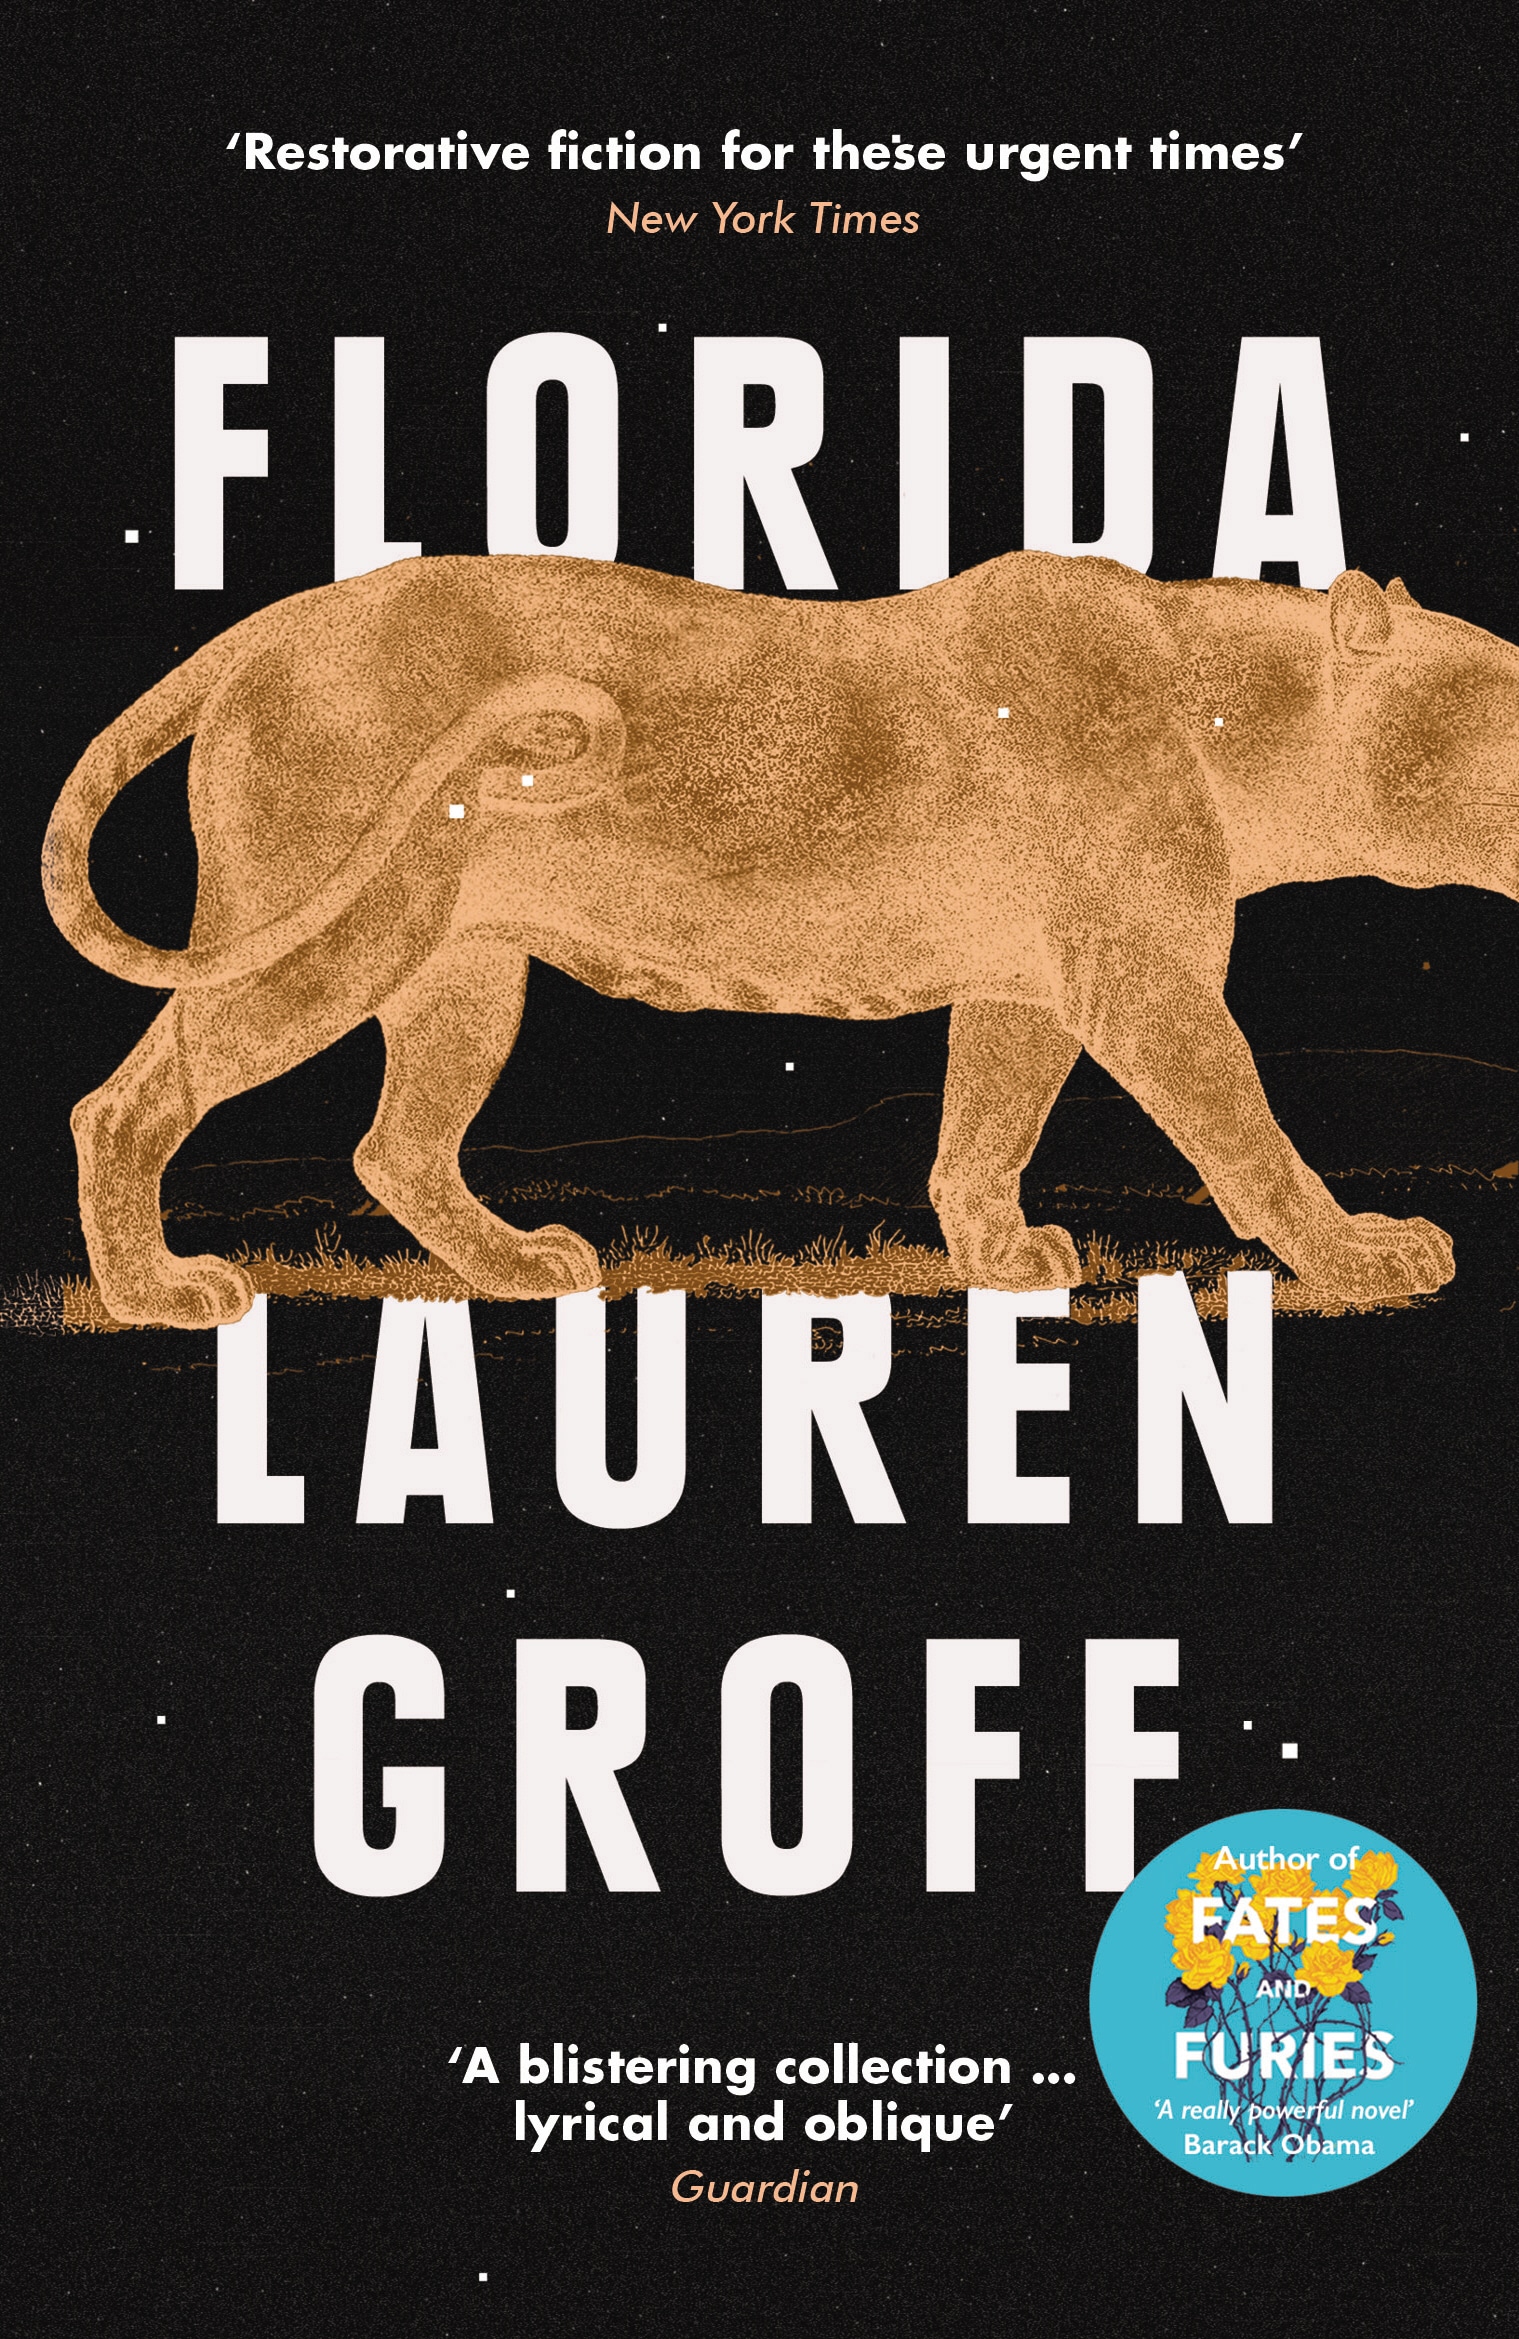 Book “Florida” by Lauren Groff — May 16, 2019